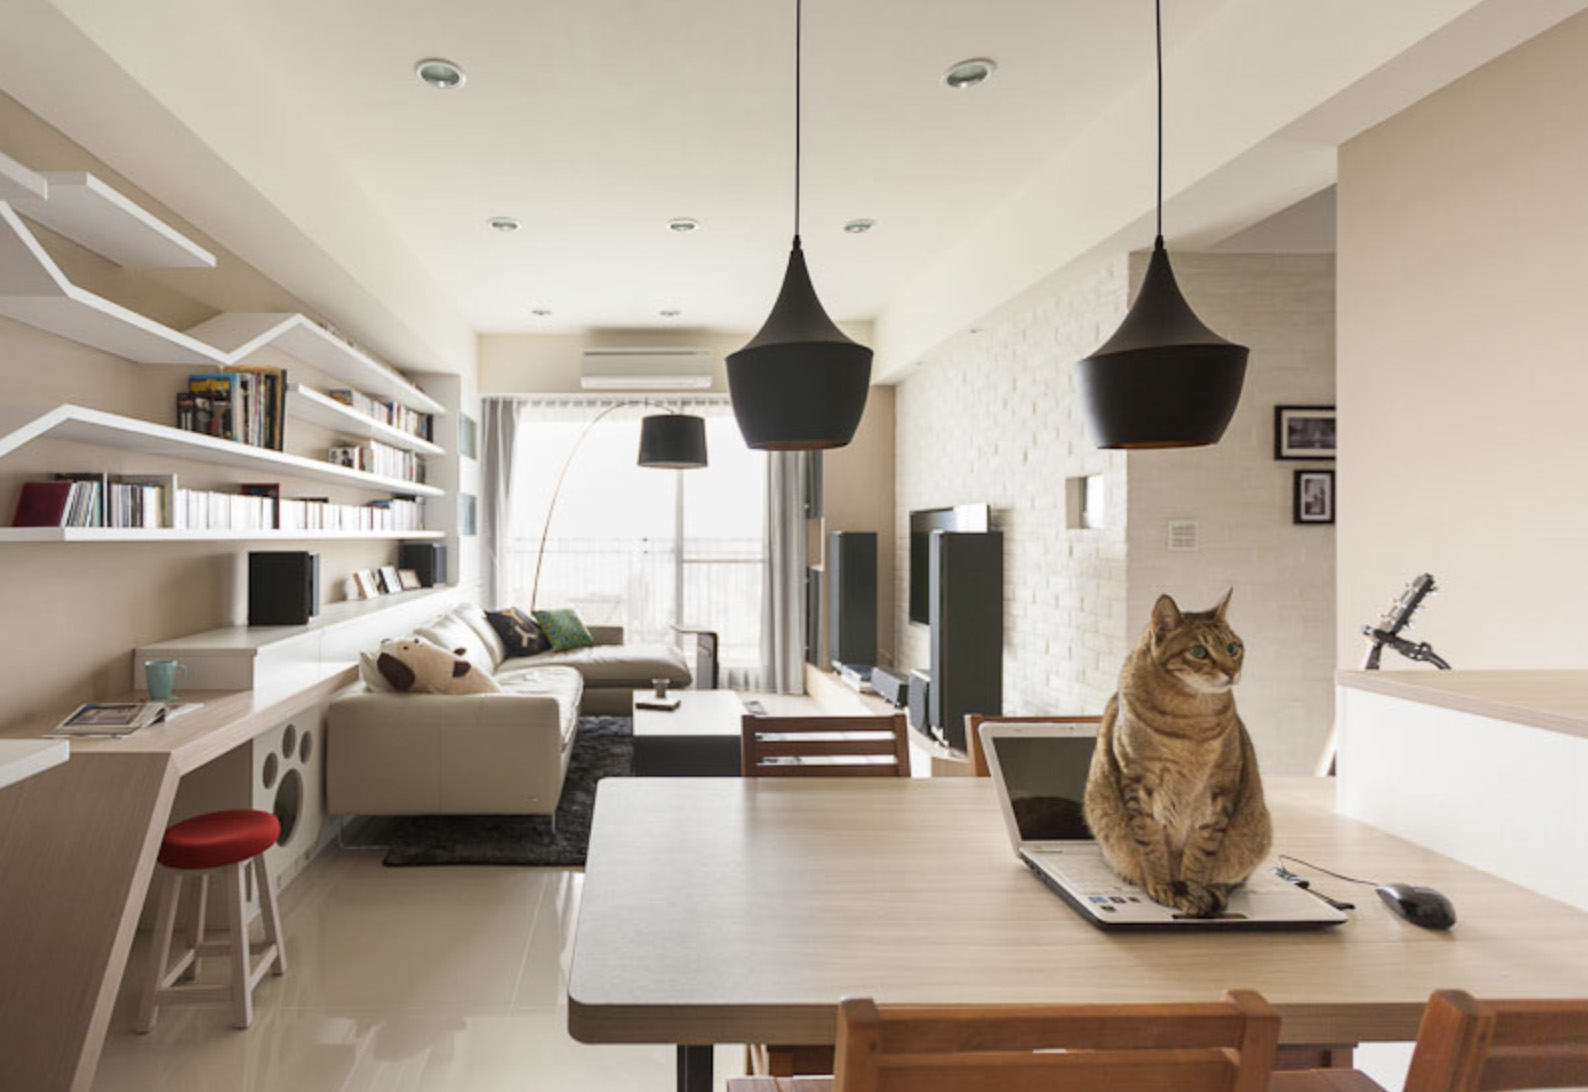 Циан квартира с животными. Комната для кошек. Коты в интерьере квартиры. Интерьер для кота в квартире. Квартира в стиле кот.